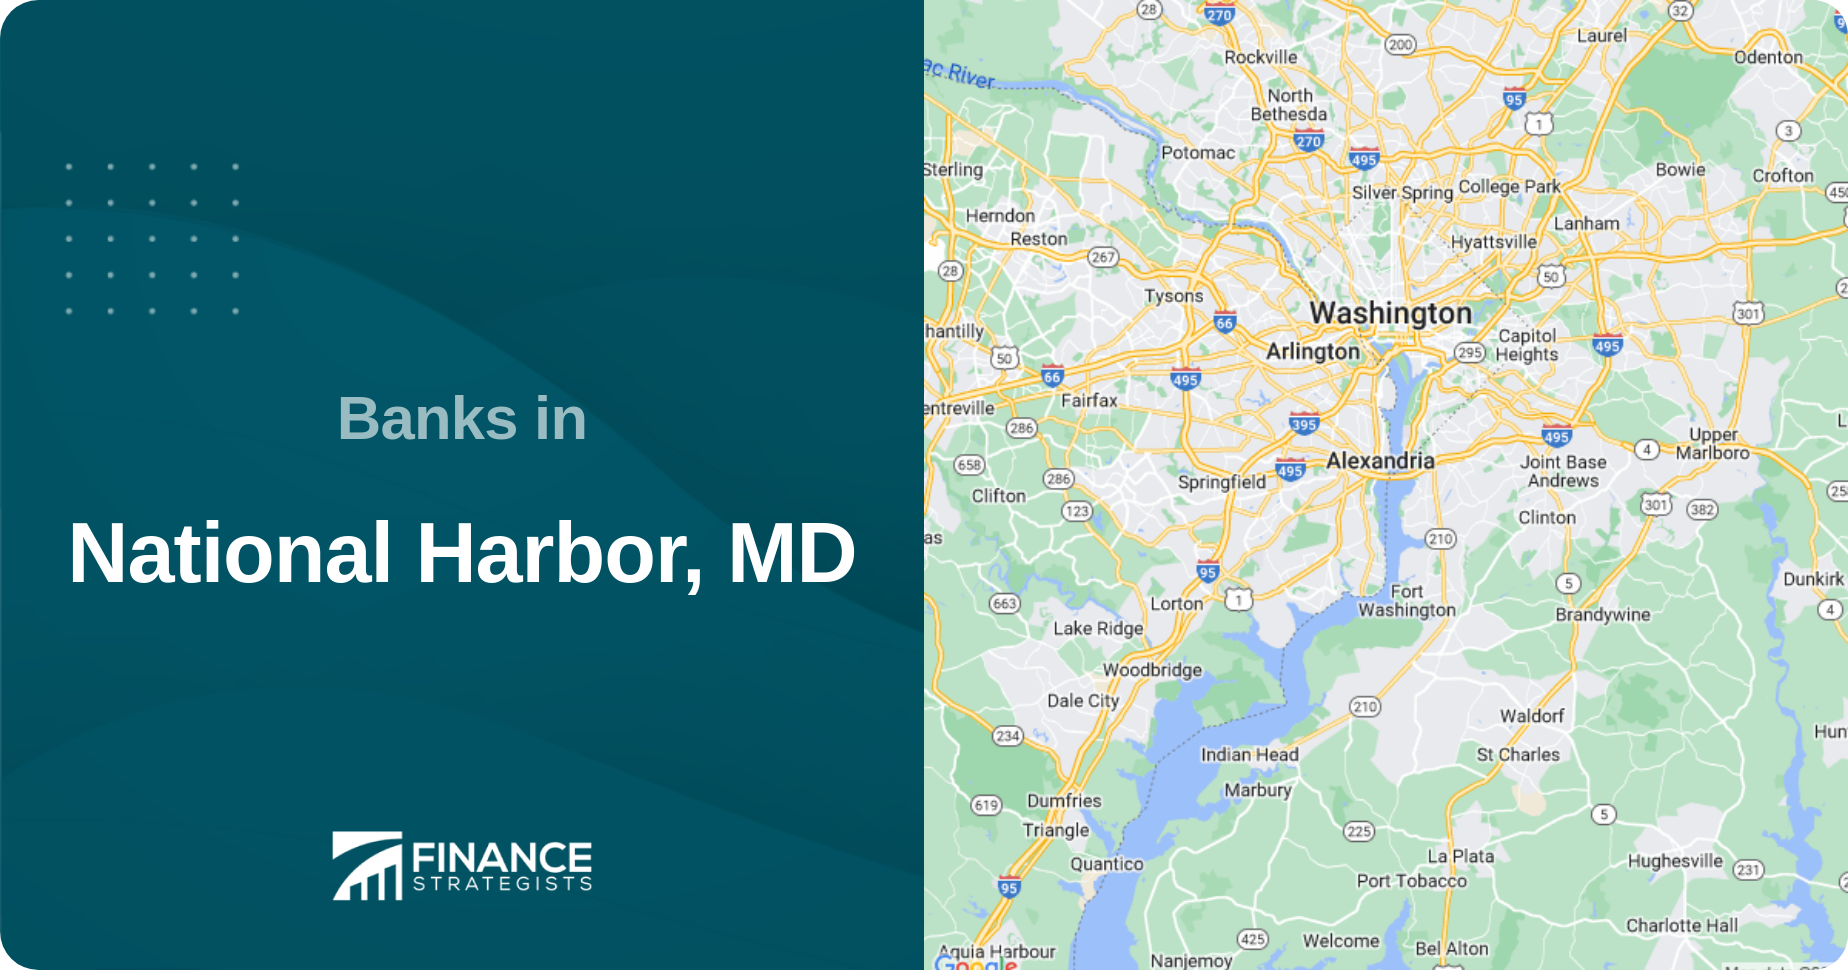 Banks in National Harbor, MD